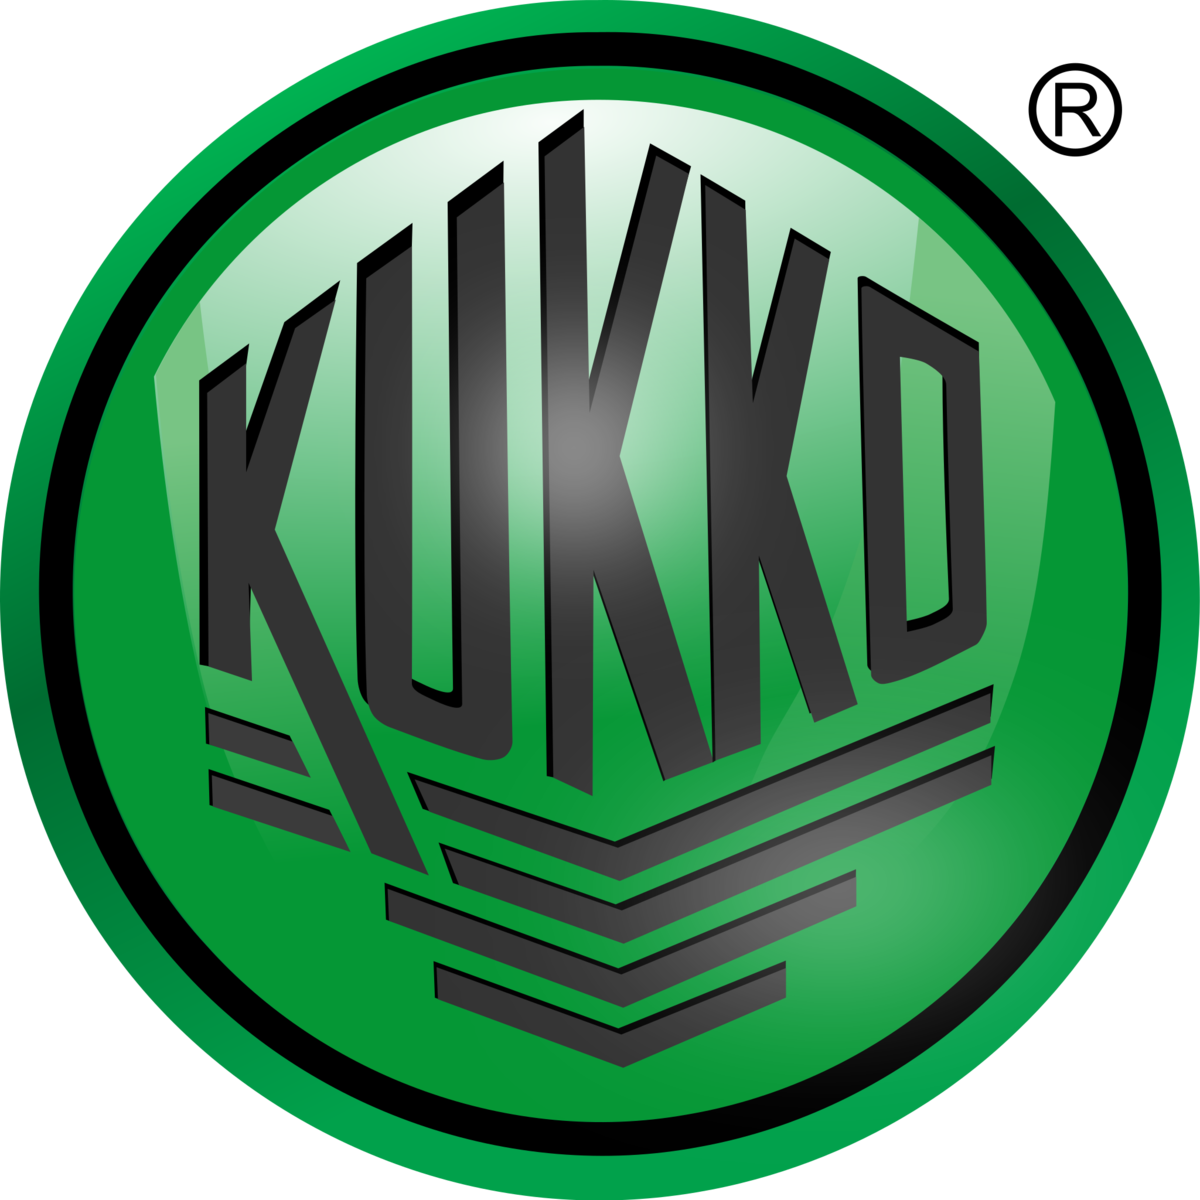 kukko_logo